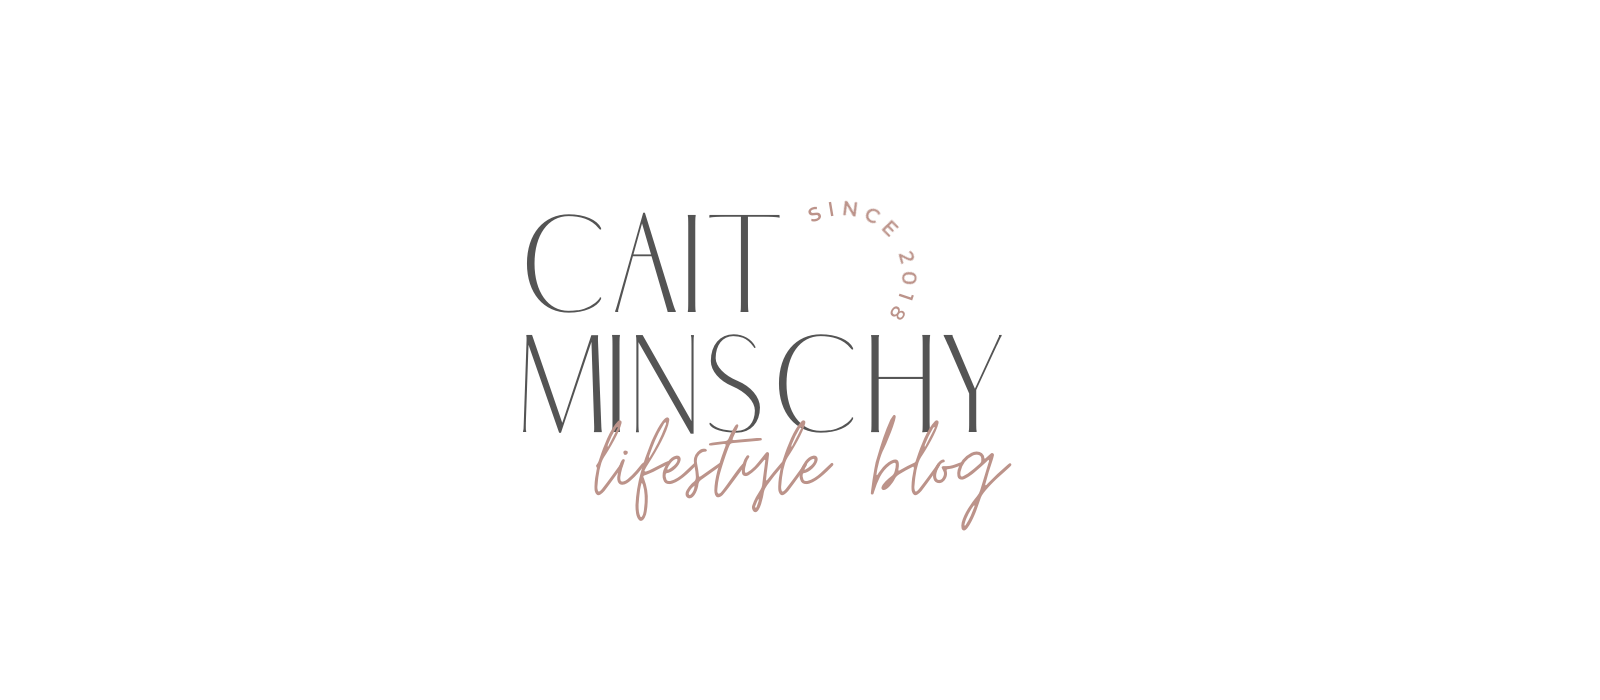 Pantry Organization that's Pinterest-Worthy - Cait Minschy